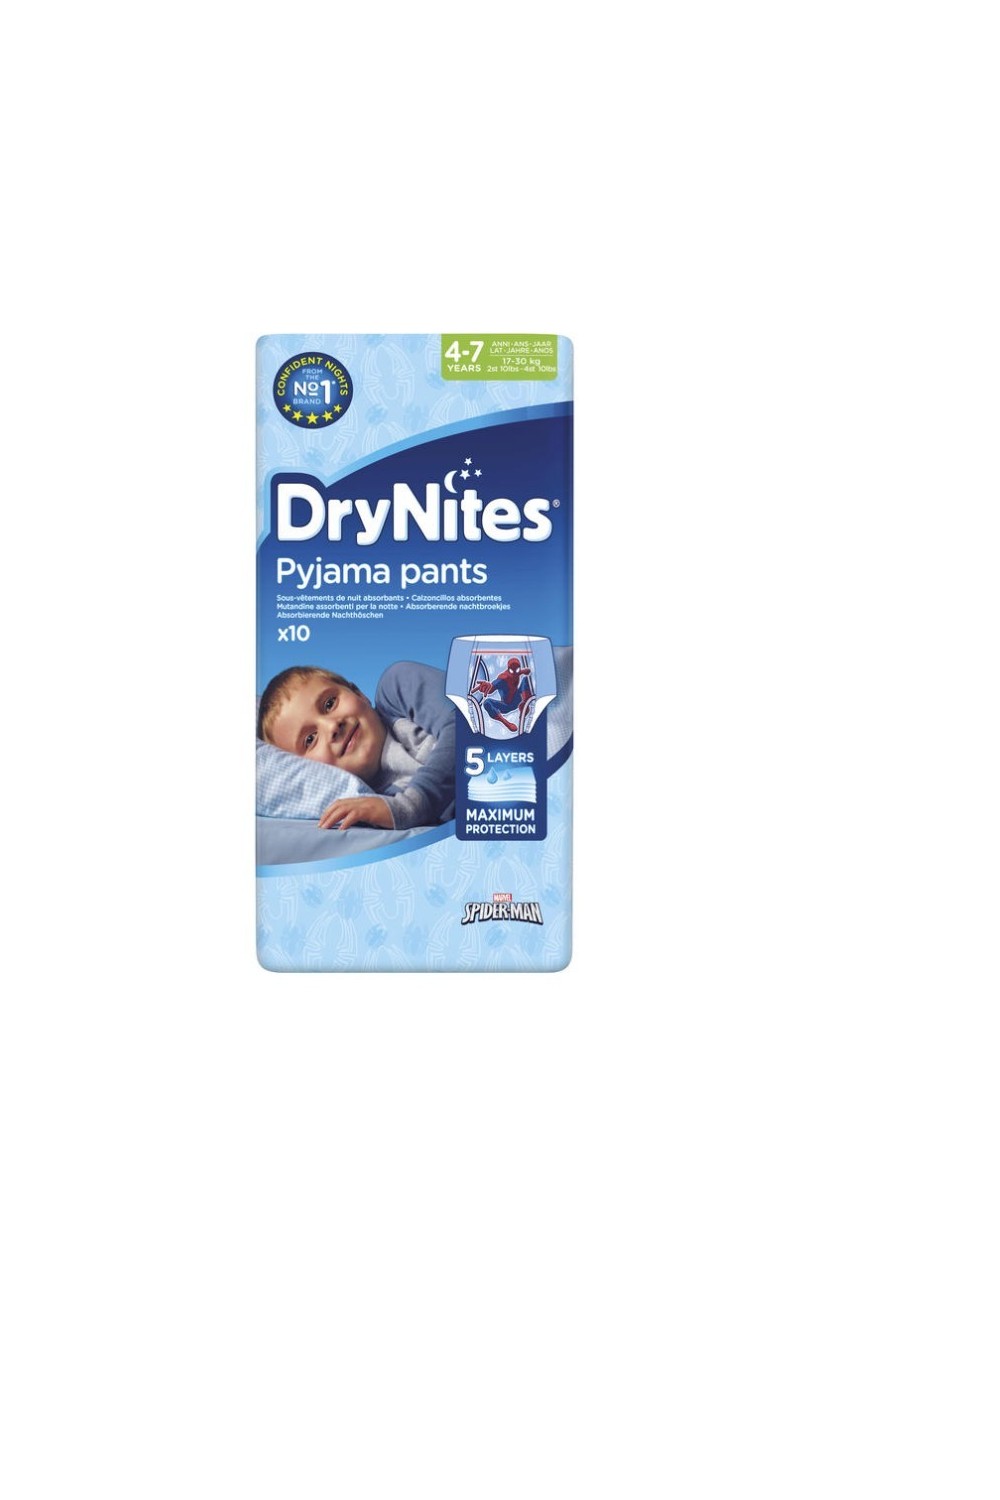 Drynites Pyjama Pants 4-7 Years 10 Units